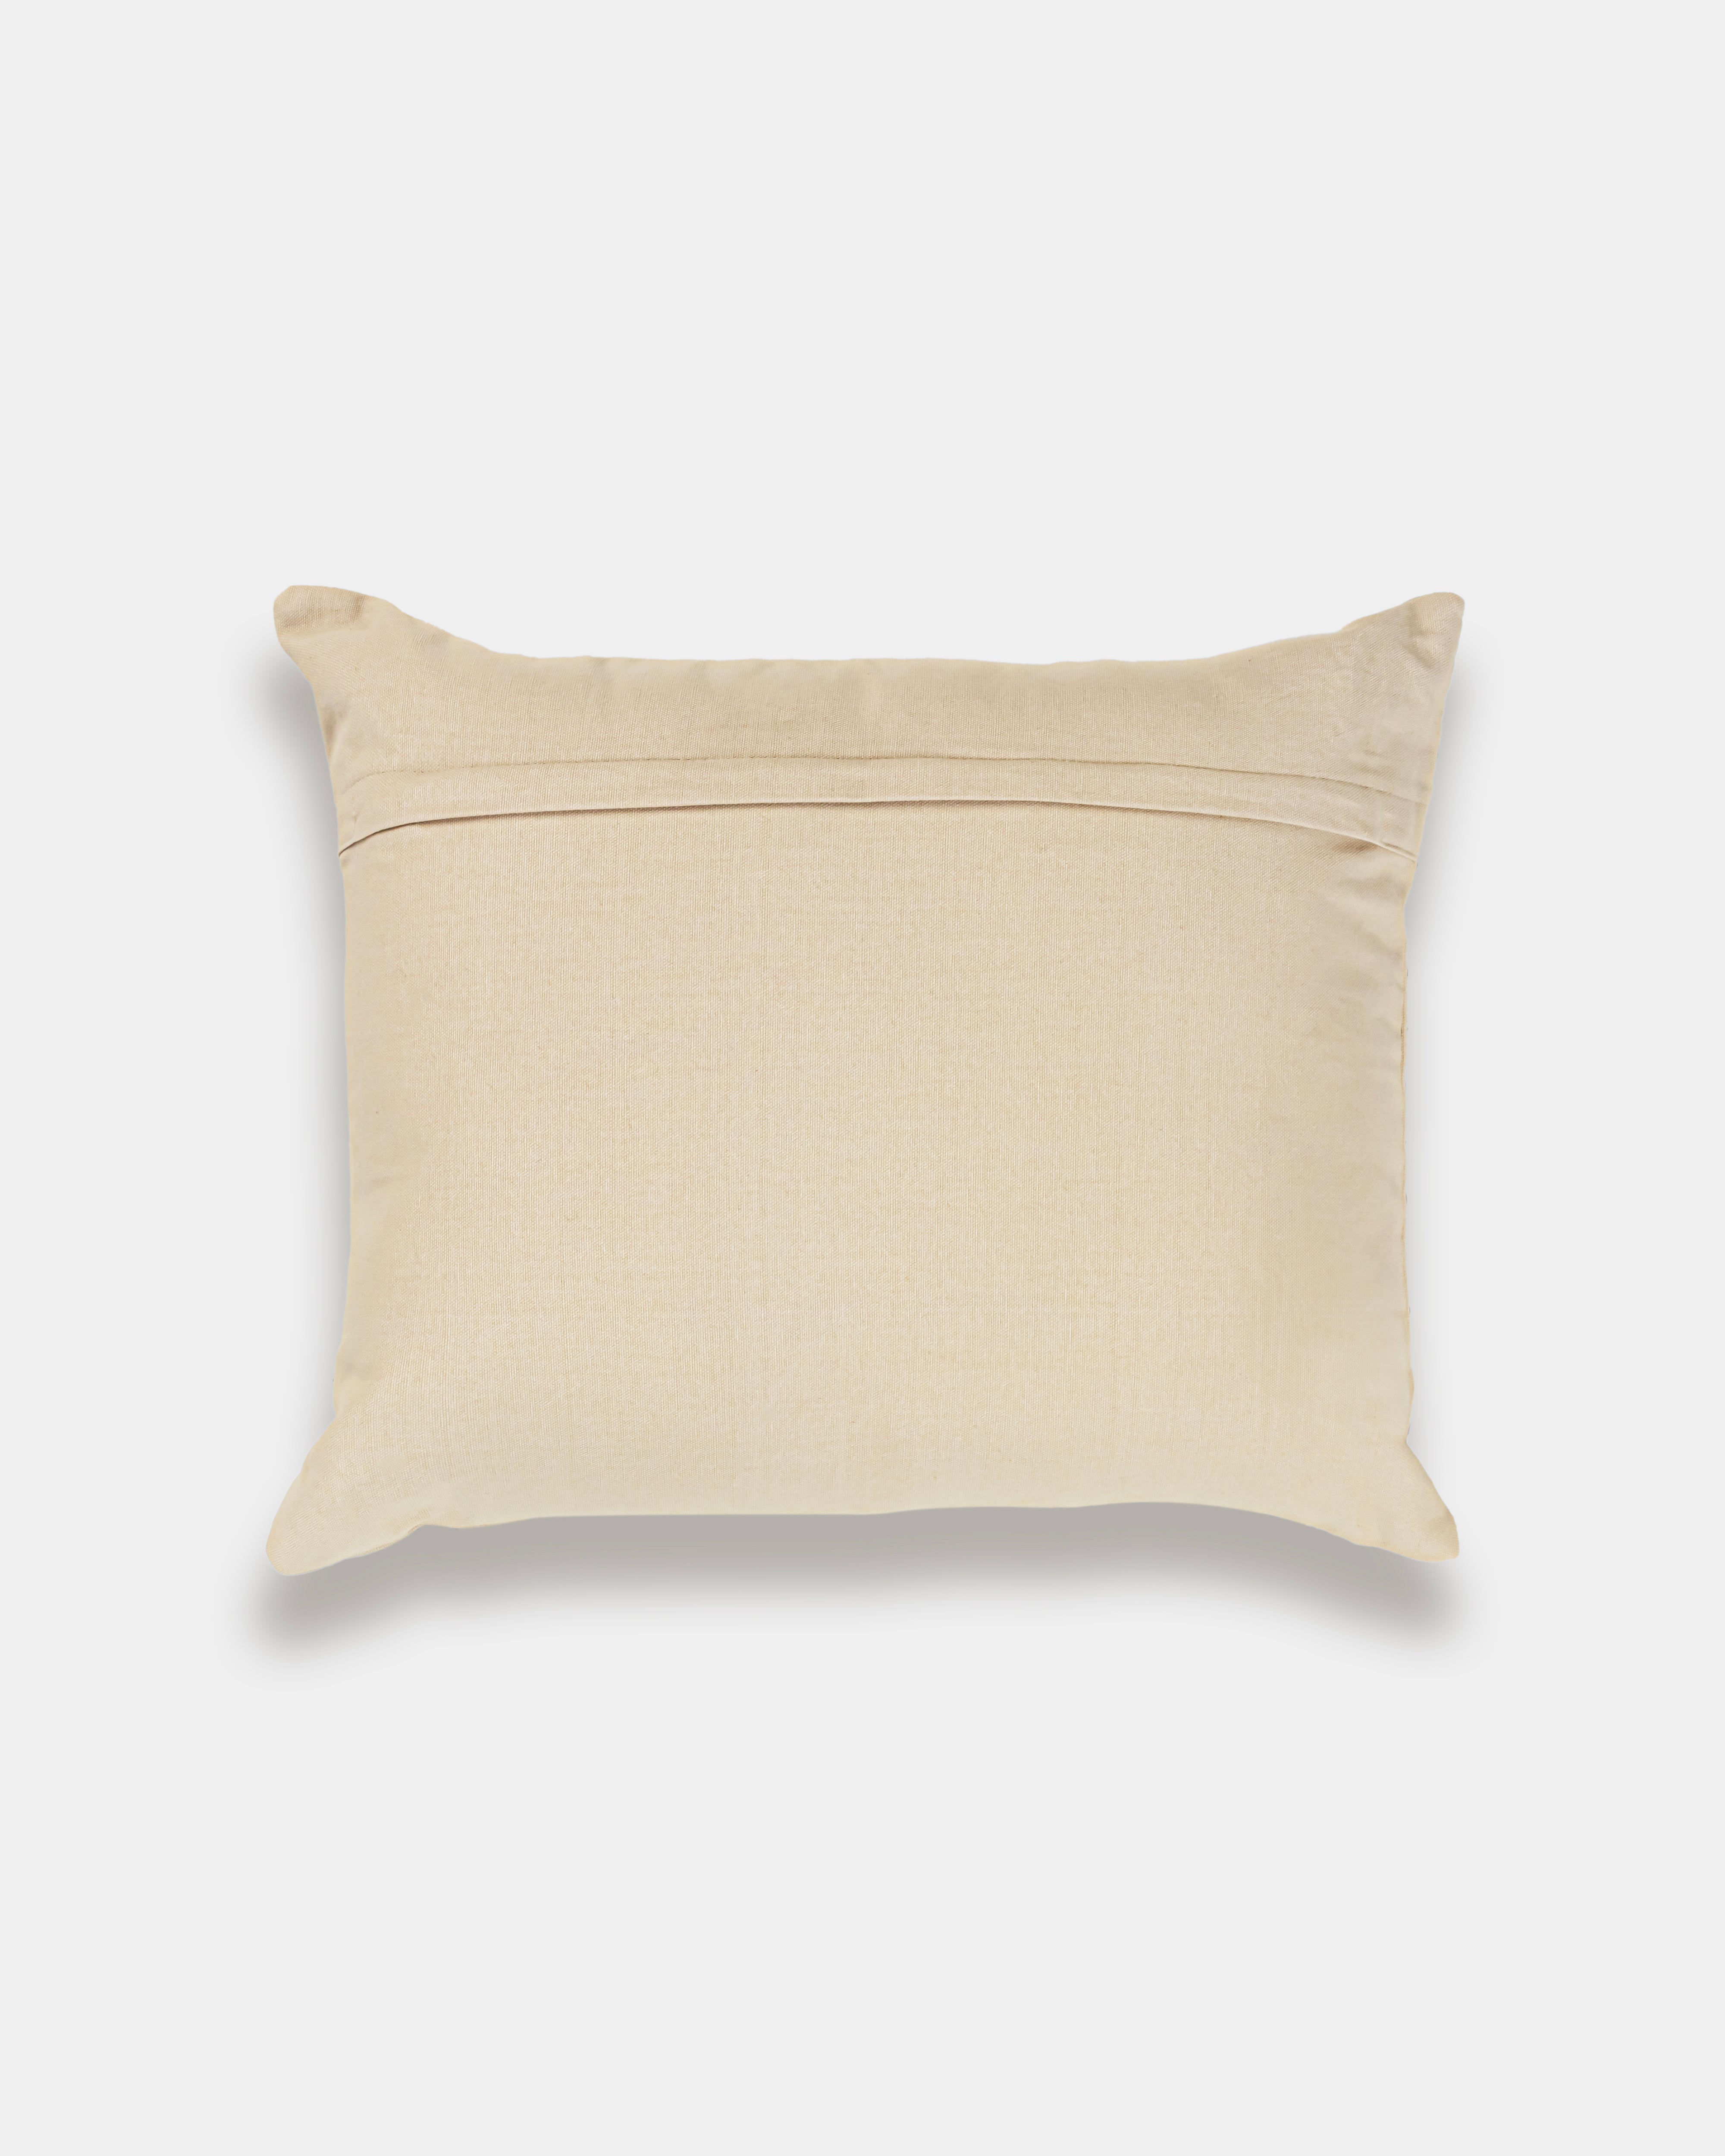 Suzani Pillow | Green Pillow Cover Fauna 16x20" | Made in Jaipur